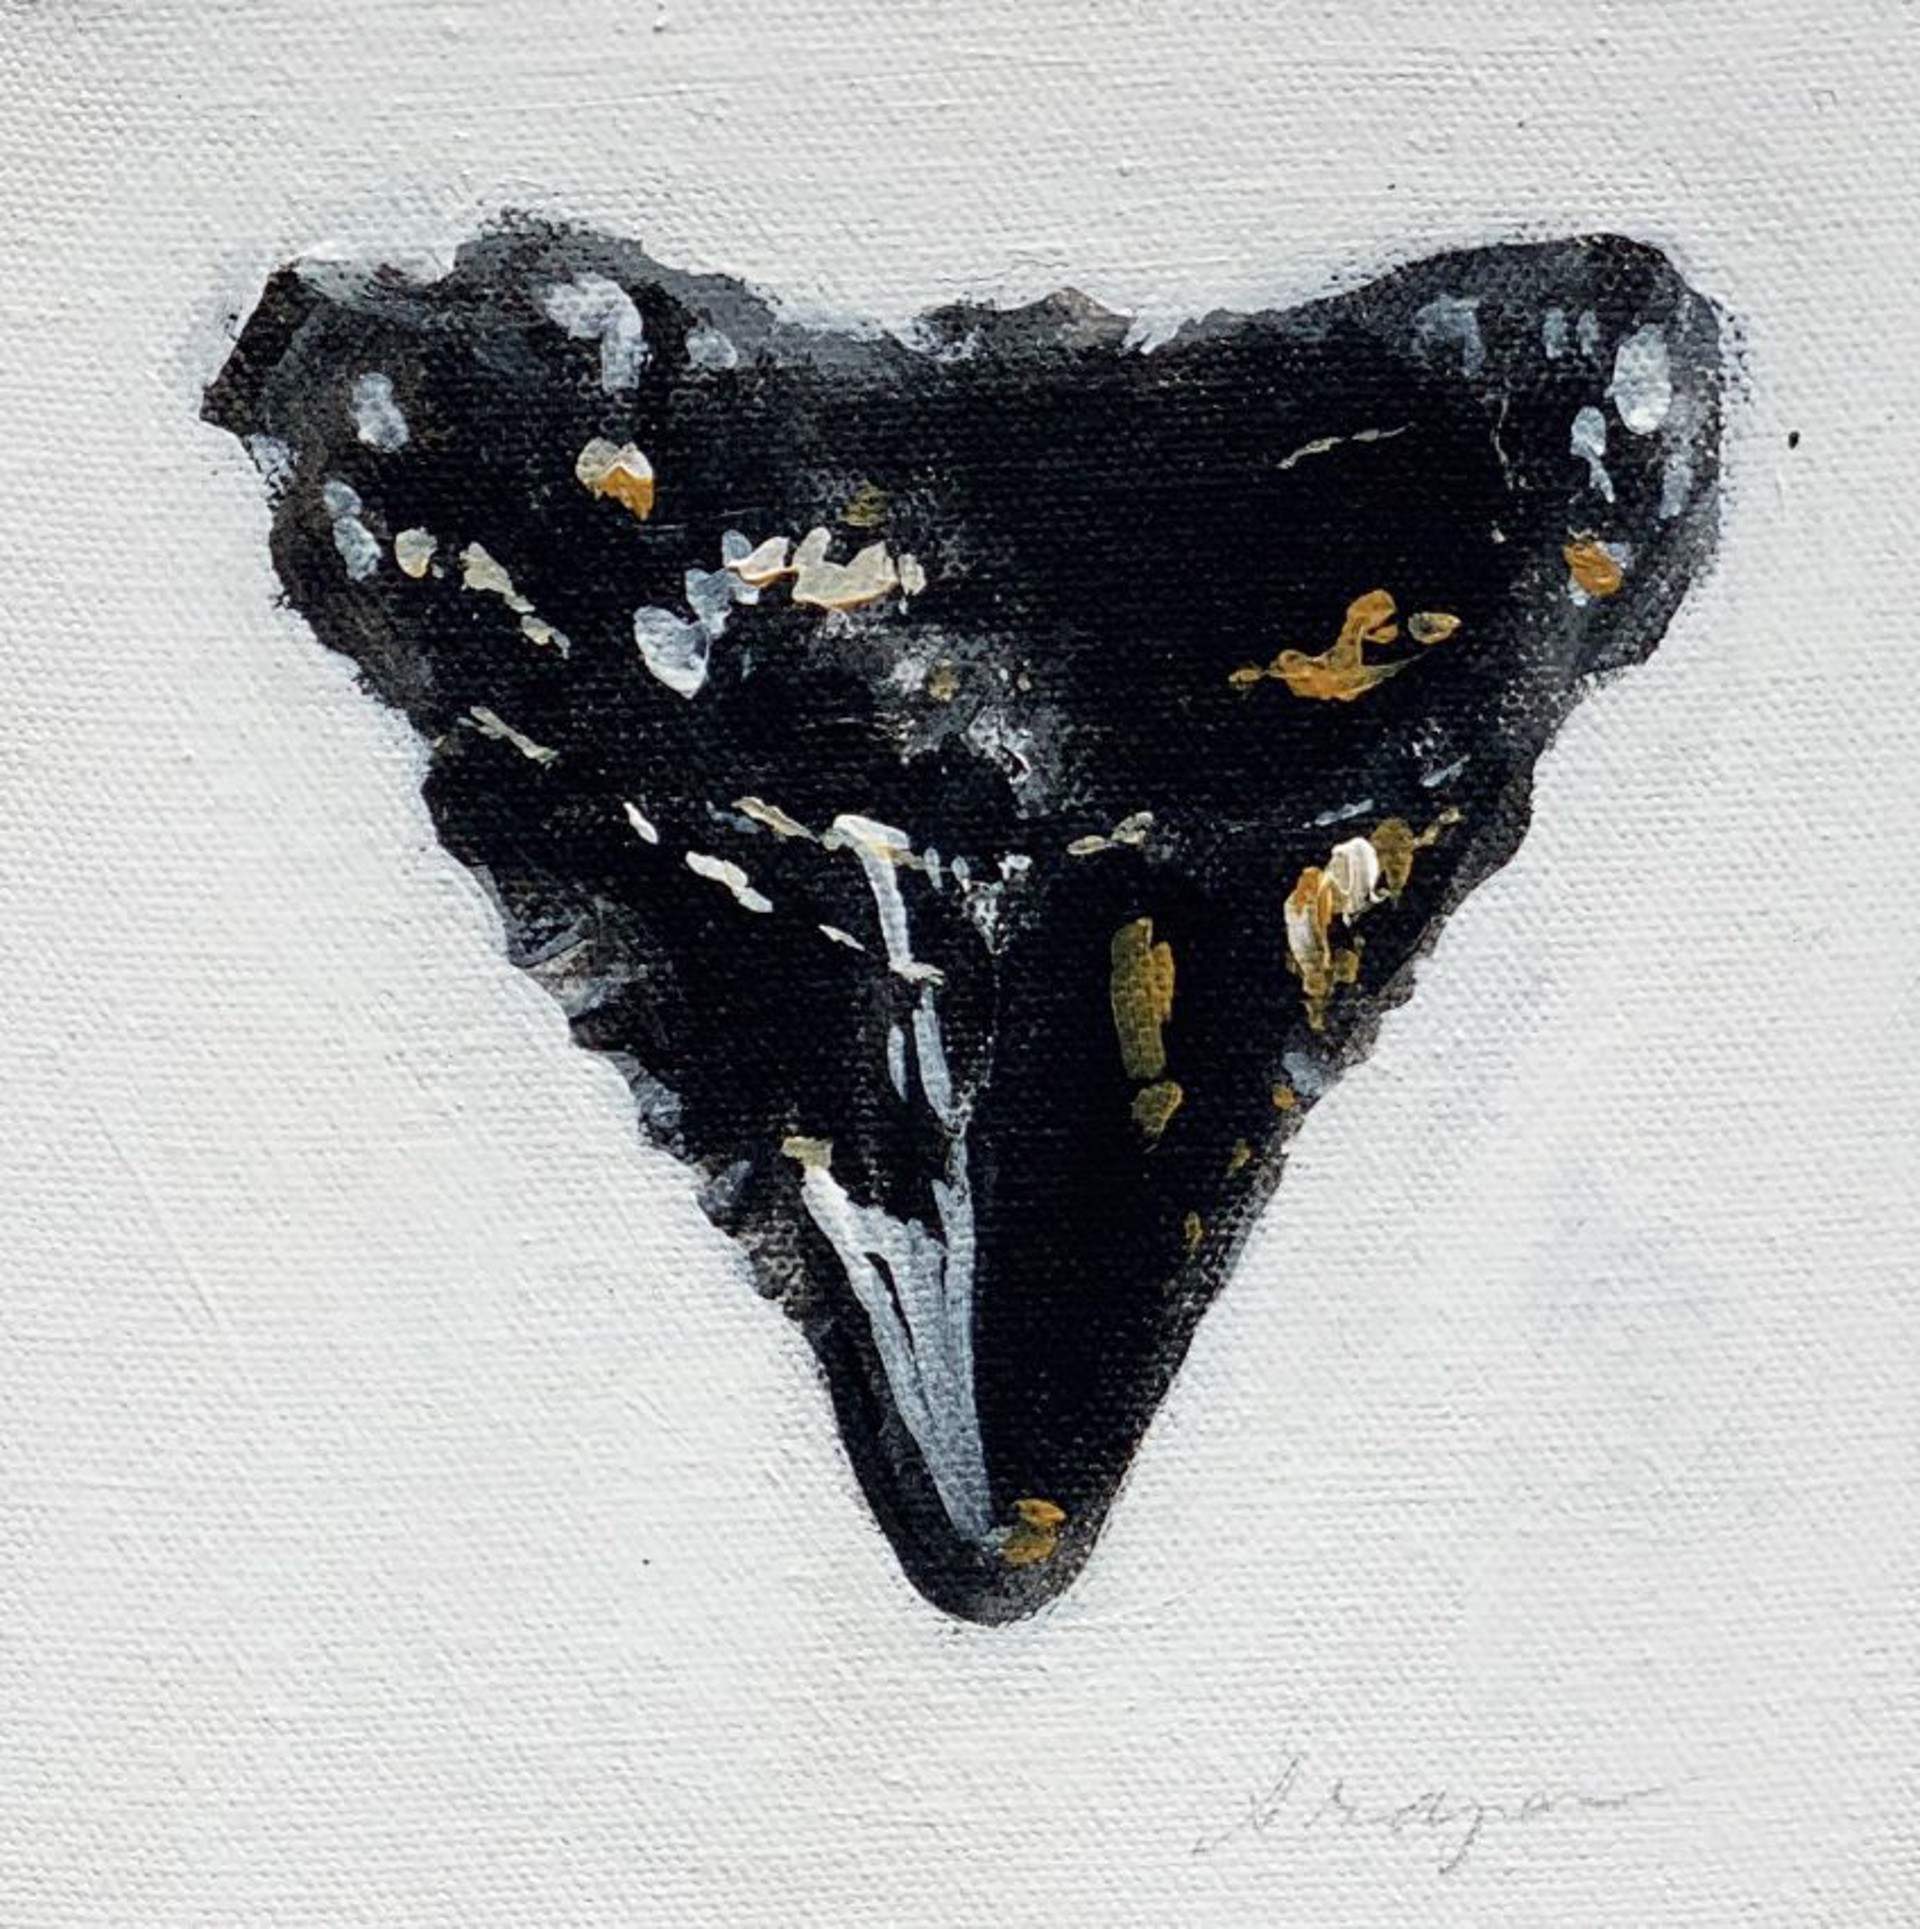 Sharksteeth-12x12 by Jim Draper